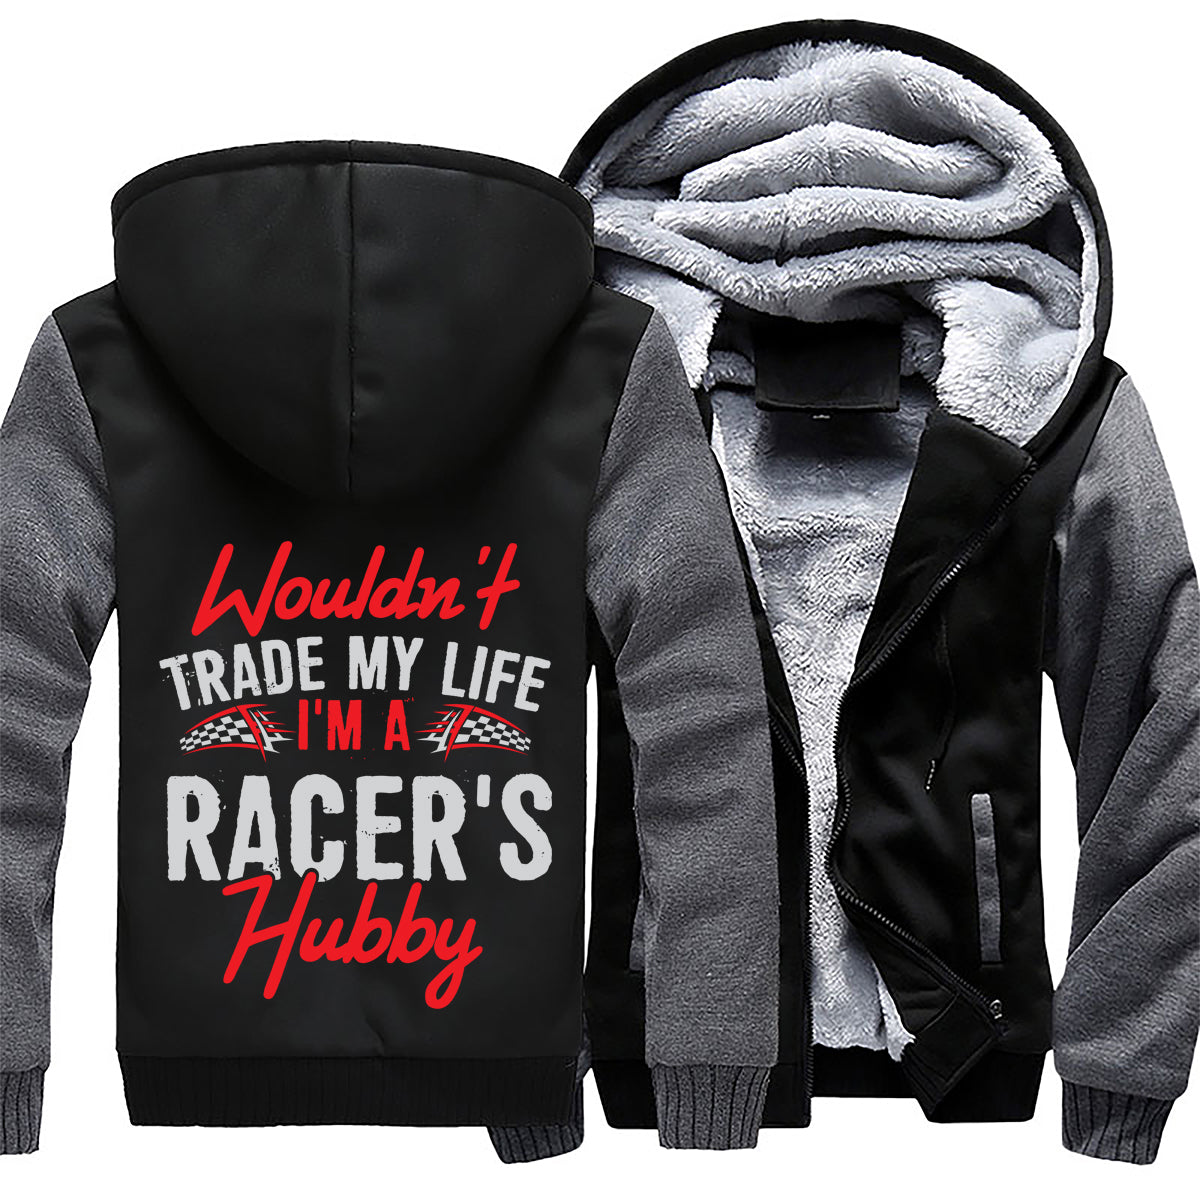 I'm A Racer's Hubby Jacket 